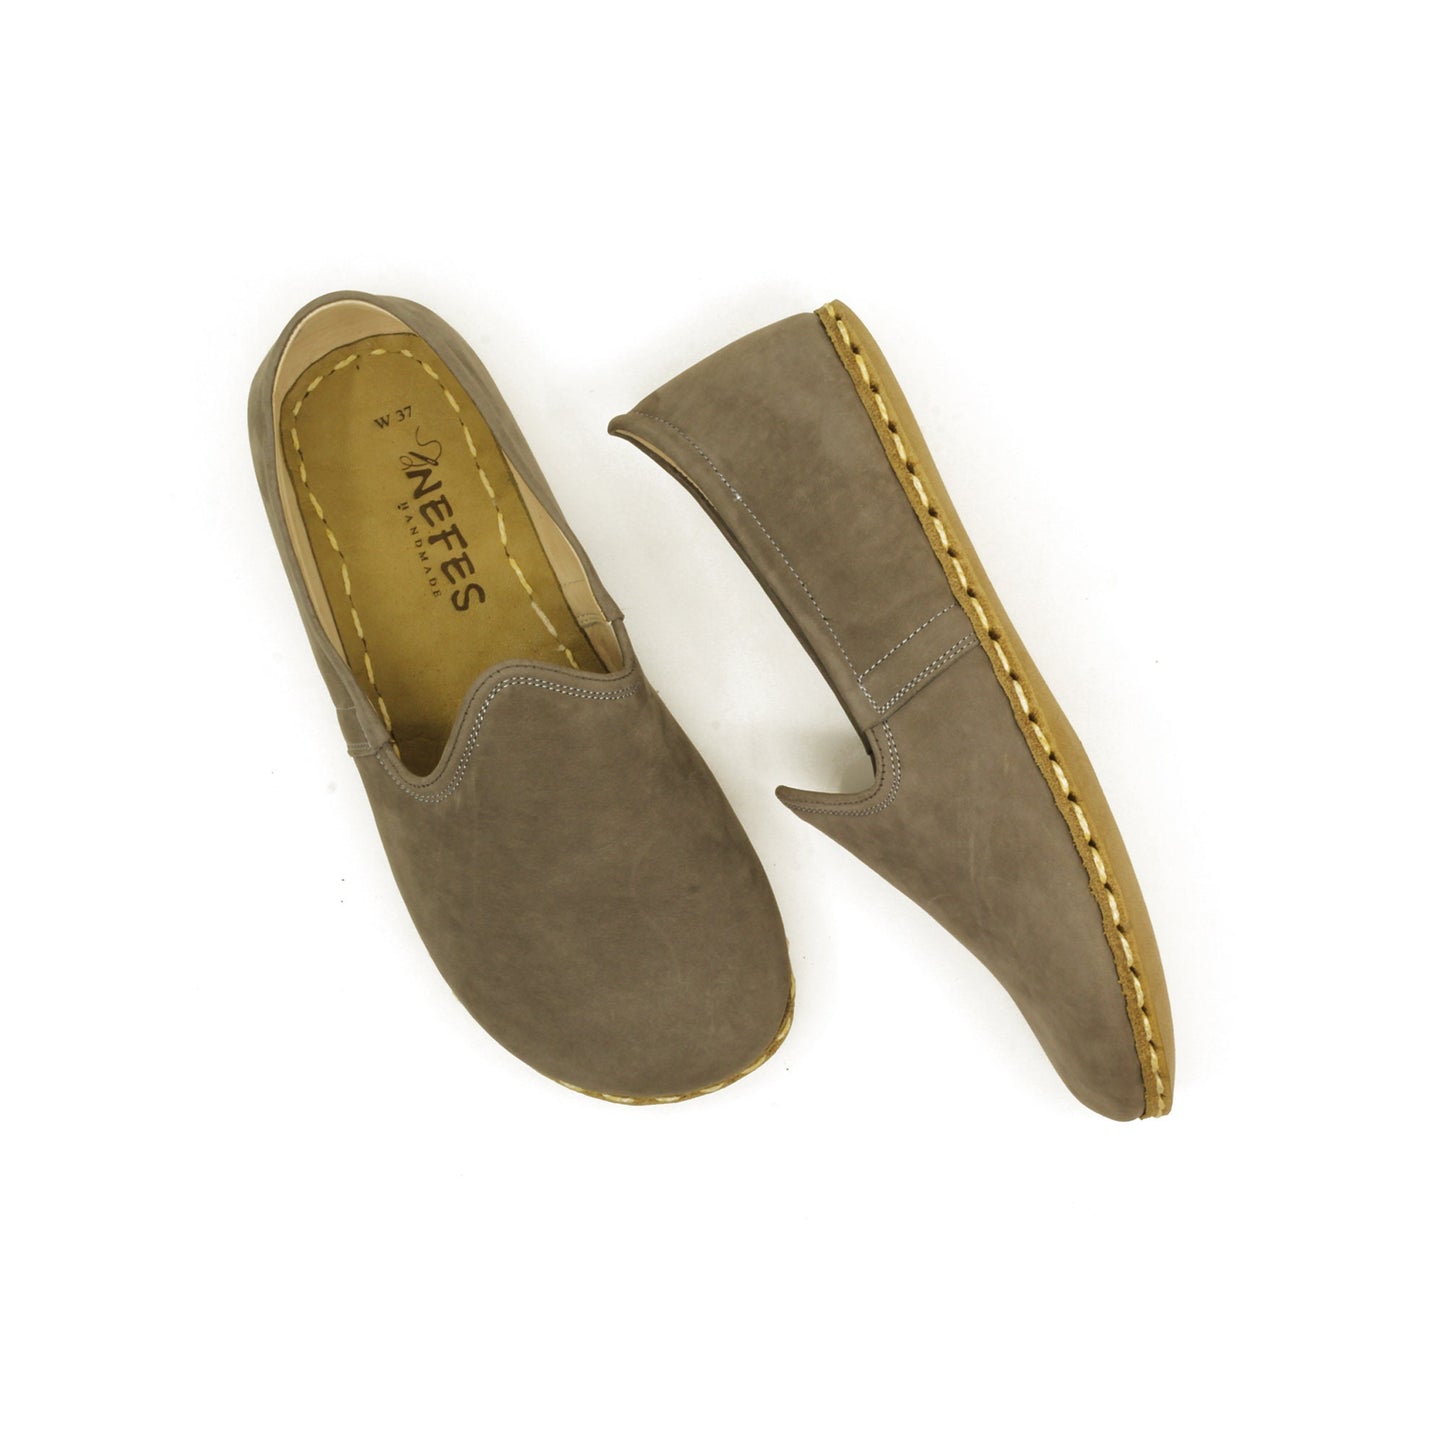 Handmade Gray Nubuck Leather Loafers for Men - Zero Drop, Barefoot Feel